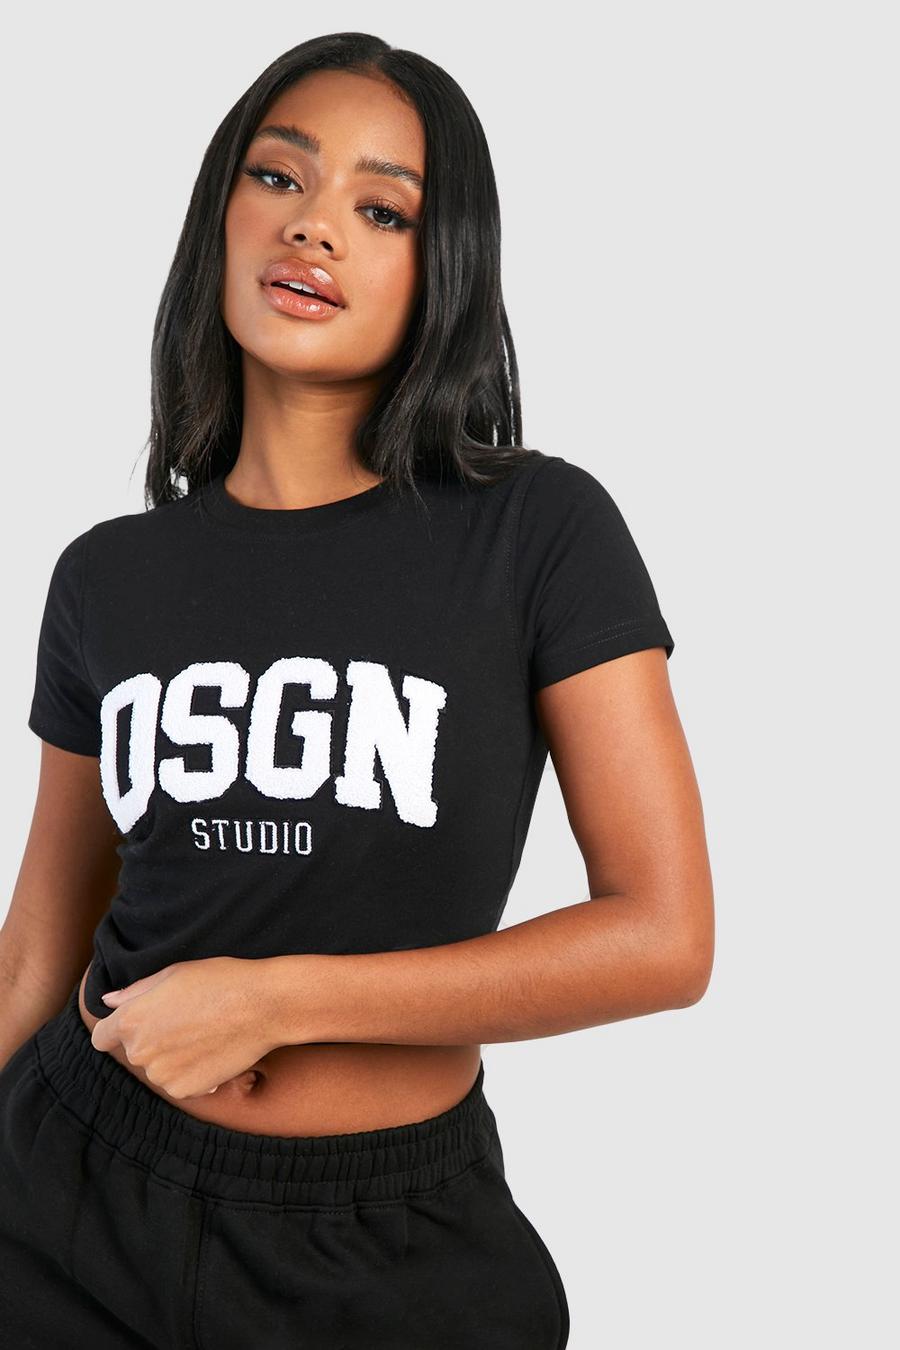 T-shirt en tissu éponge à slogan Dsgn Studio, Black image number 1